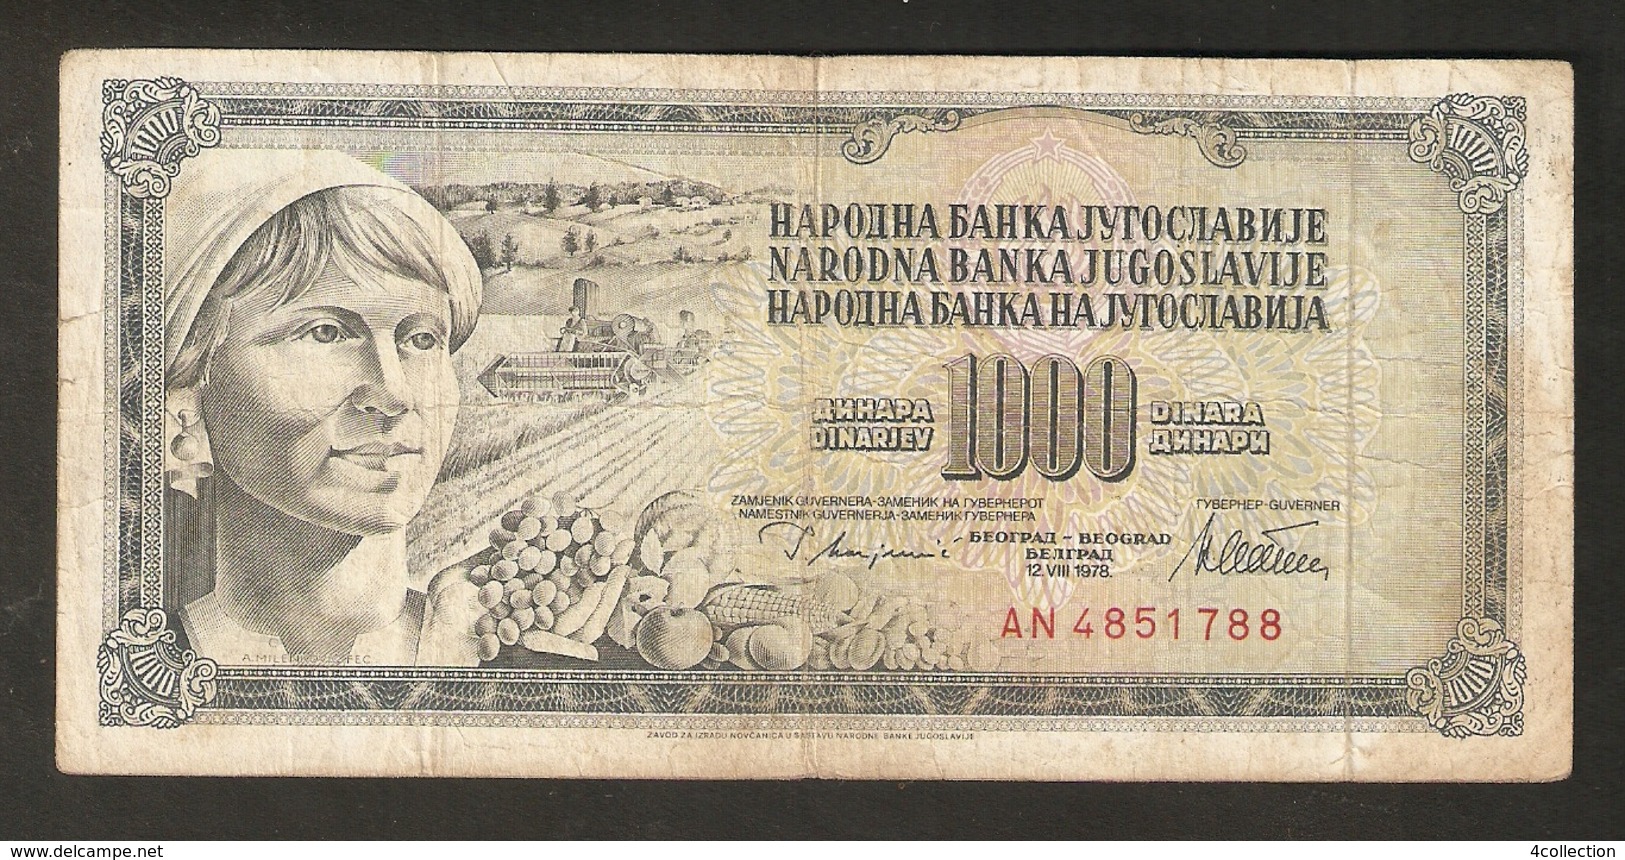 T. Yugoslavia Jugoslavije 1000 Dinara Dinarjev Beograd 12 VIII 1978 # AN 4851788 - Jugoslawien